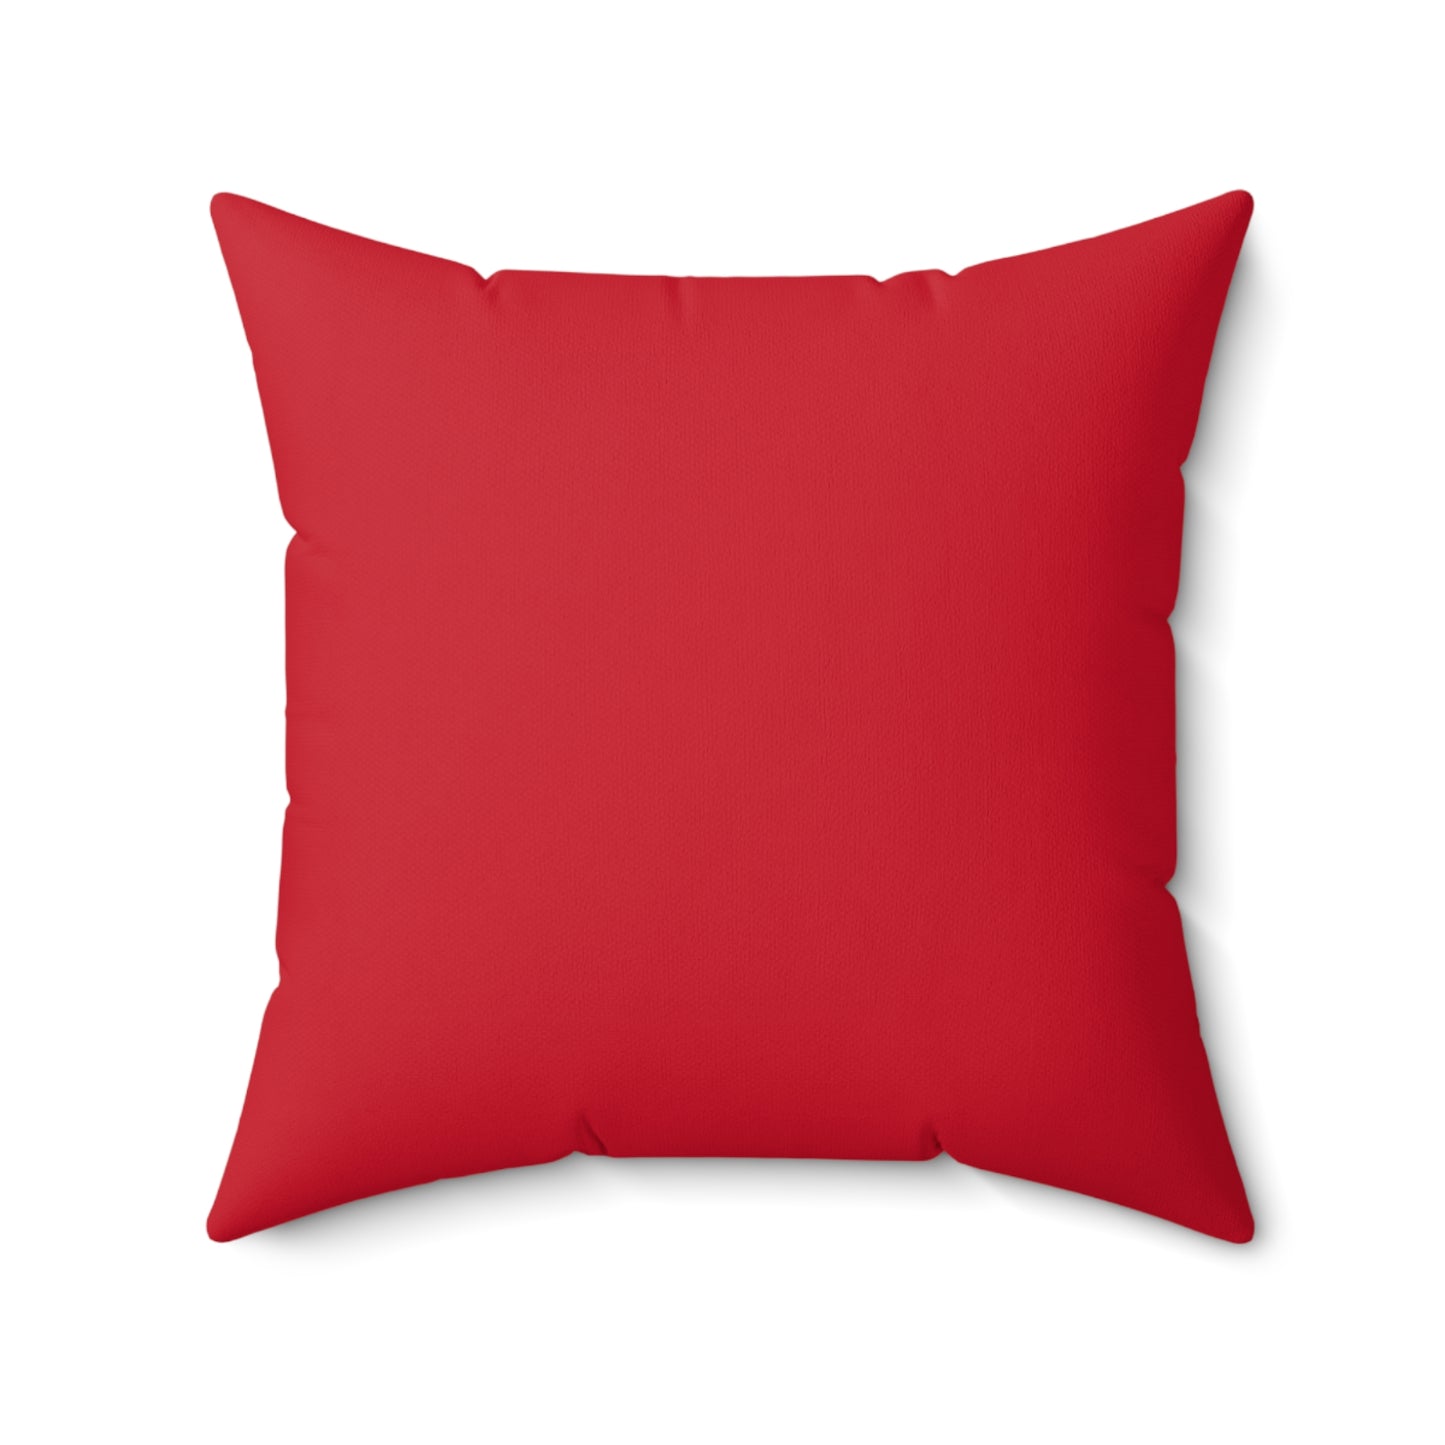 Indoor decorative cushion- Liverpool FC, Anfield stadium